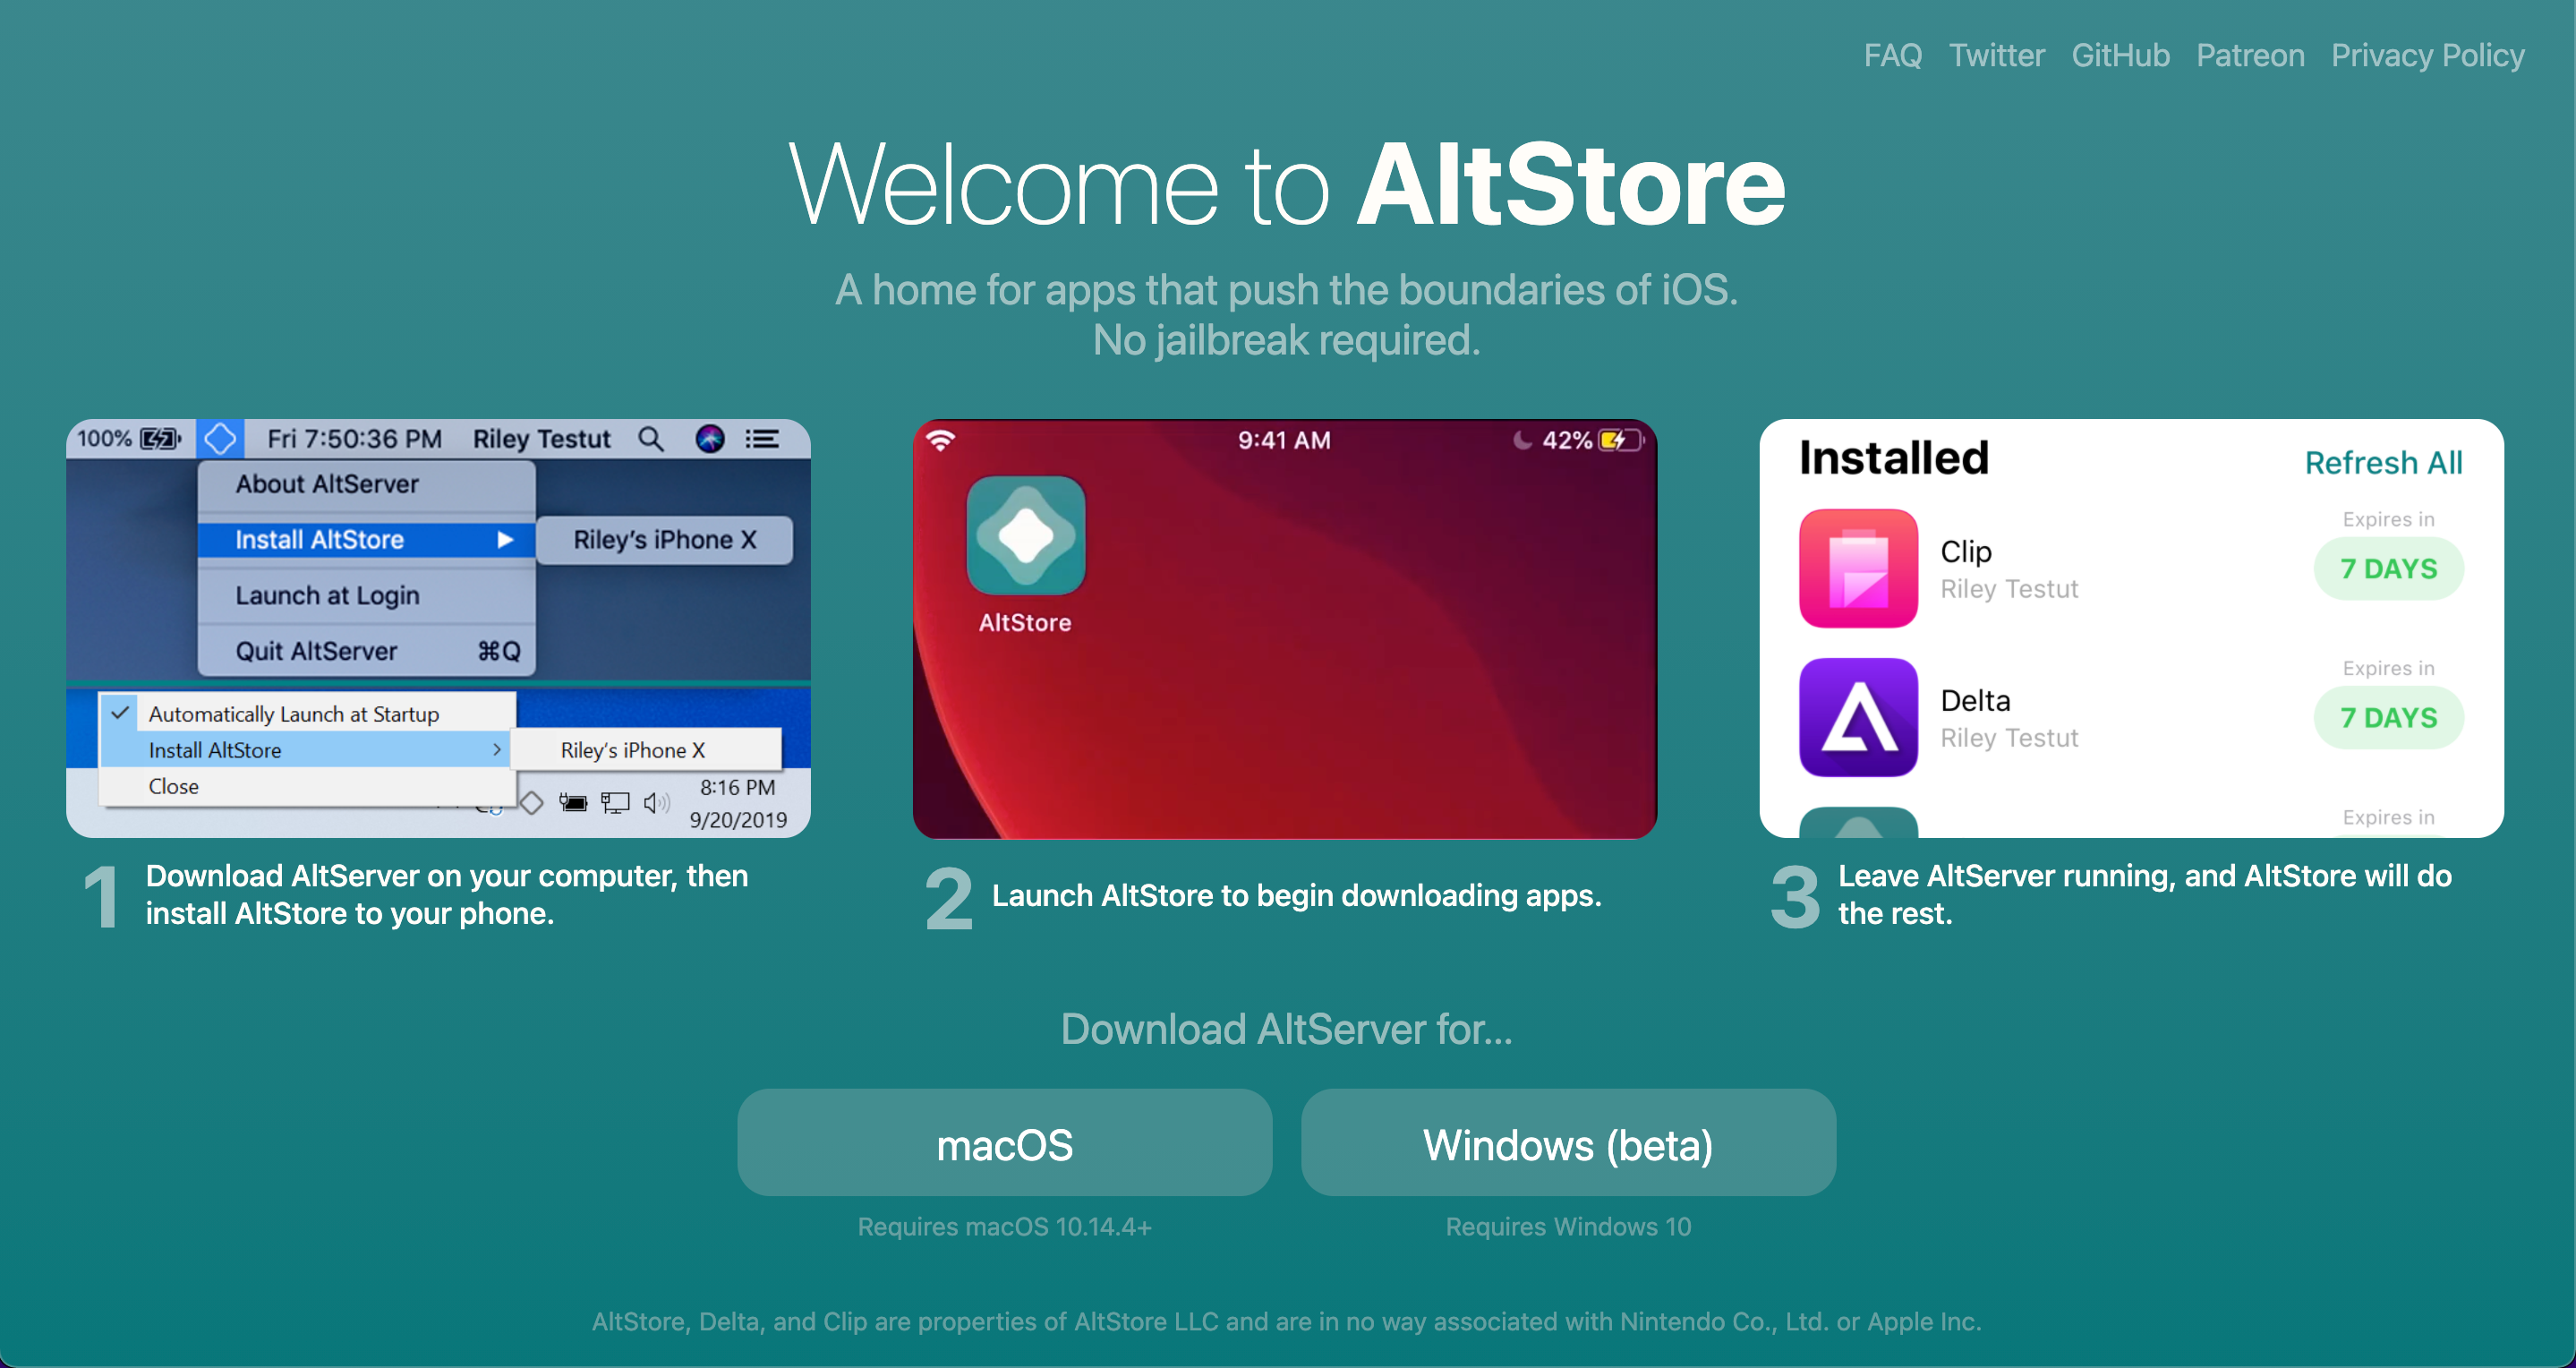 AltStore Homepage - Come eseguire il jailbreak del tuo iPhone gratuitamente (iOS 11 – iOS 14)